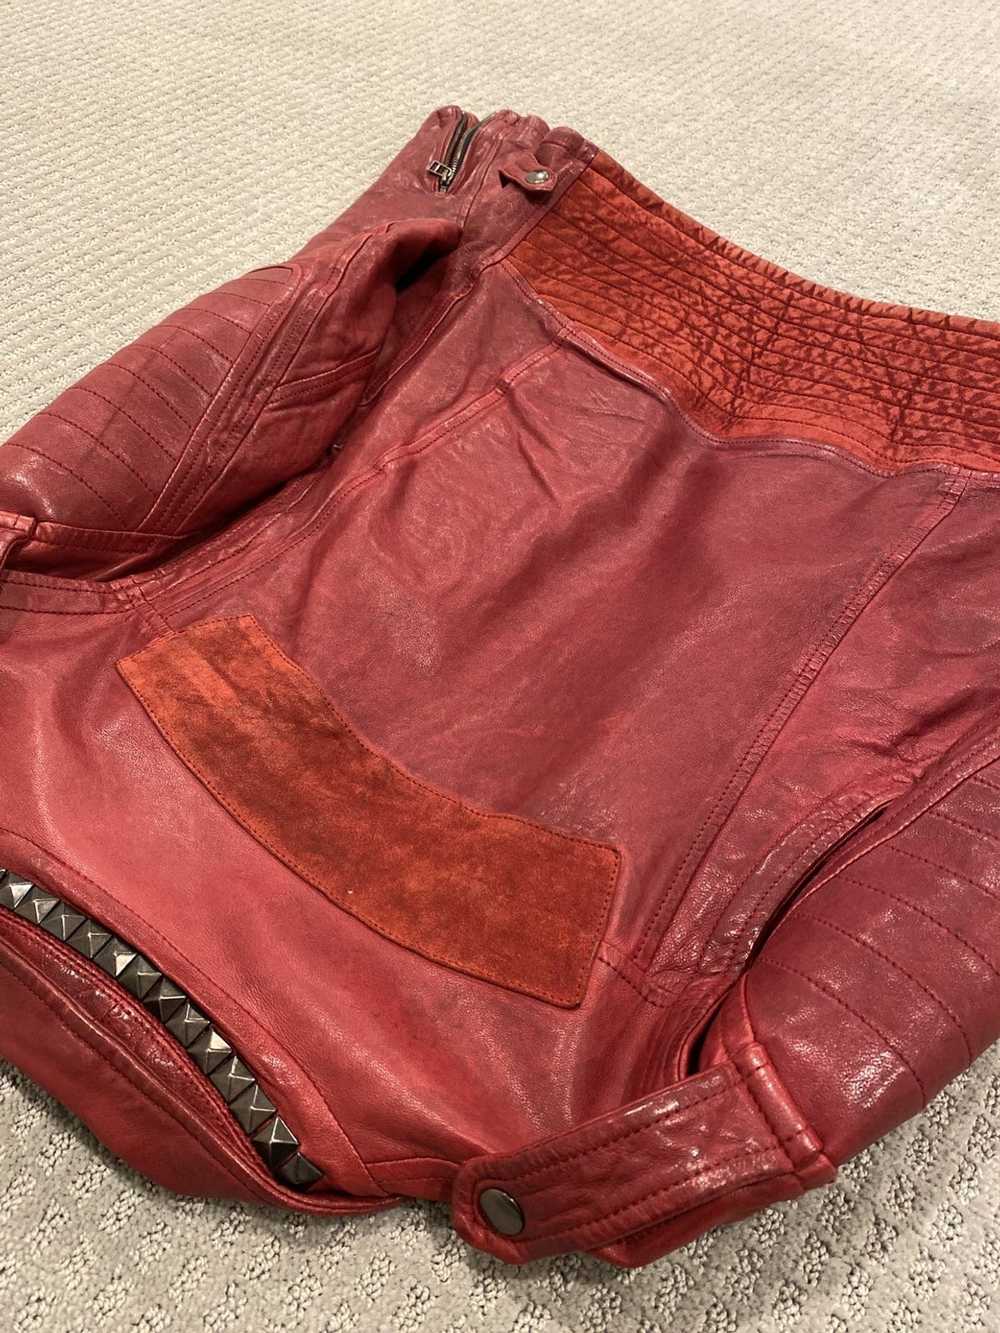 Edun Edun Red Leather Moto Jacket - image 3